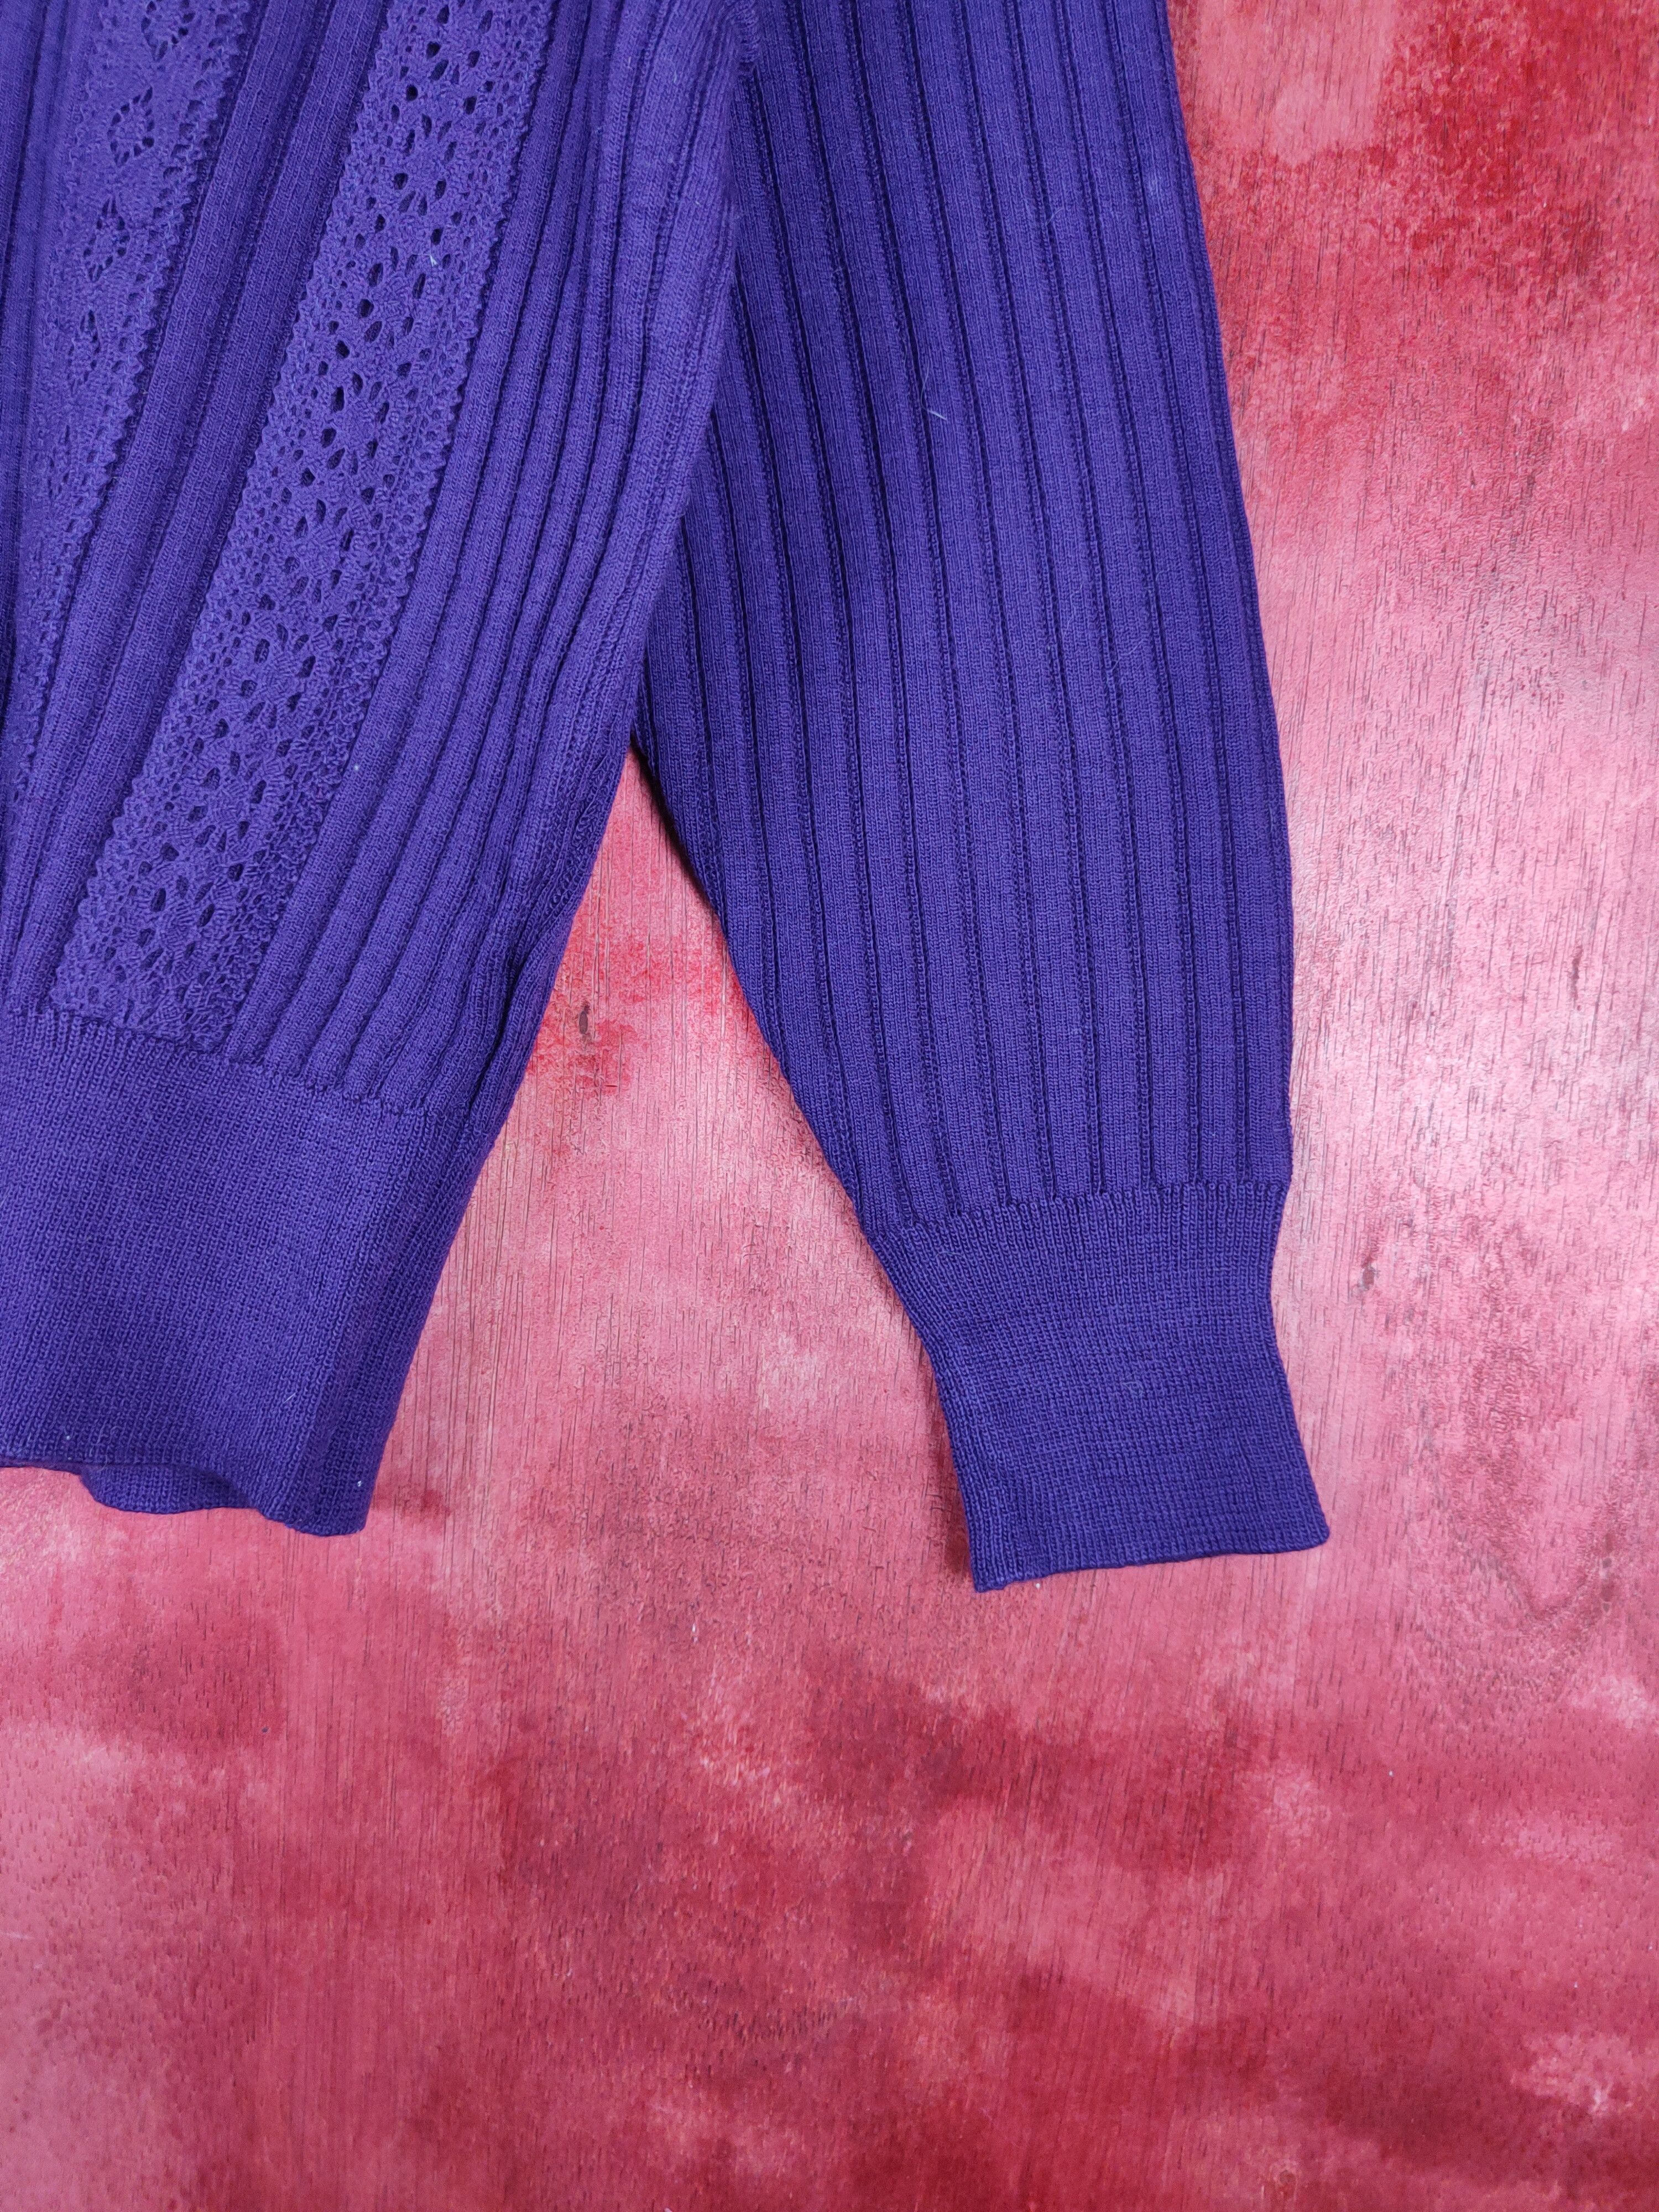 Japanese Brand Kosugi Purple Knitwear Cardigan Crop Tops Size L / US 10 / IT 46 - 6 Thumbnail